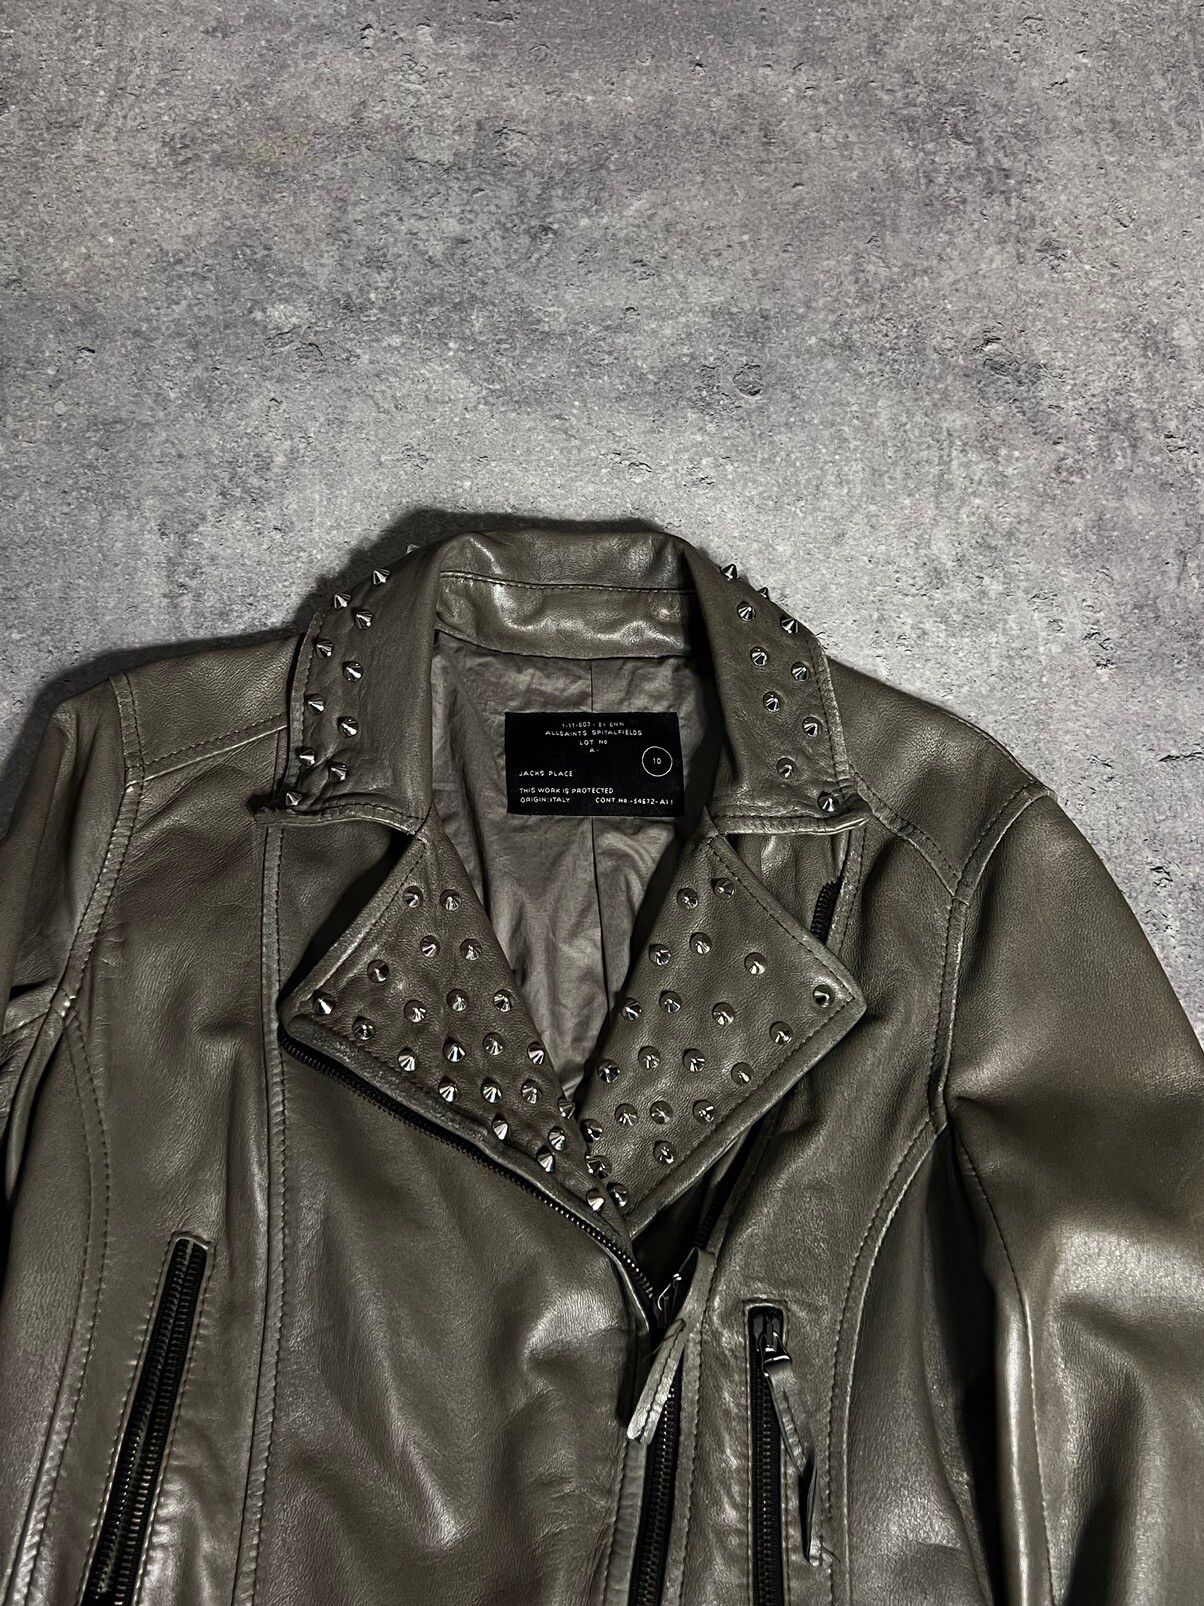 Allsaints Rare AllSaints Biker Leather Jacket with Studs Archive SS09 Size S / US 4 / IT 40 - 2 Preview